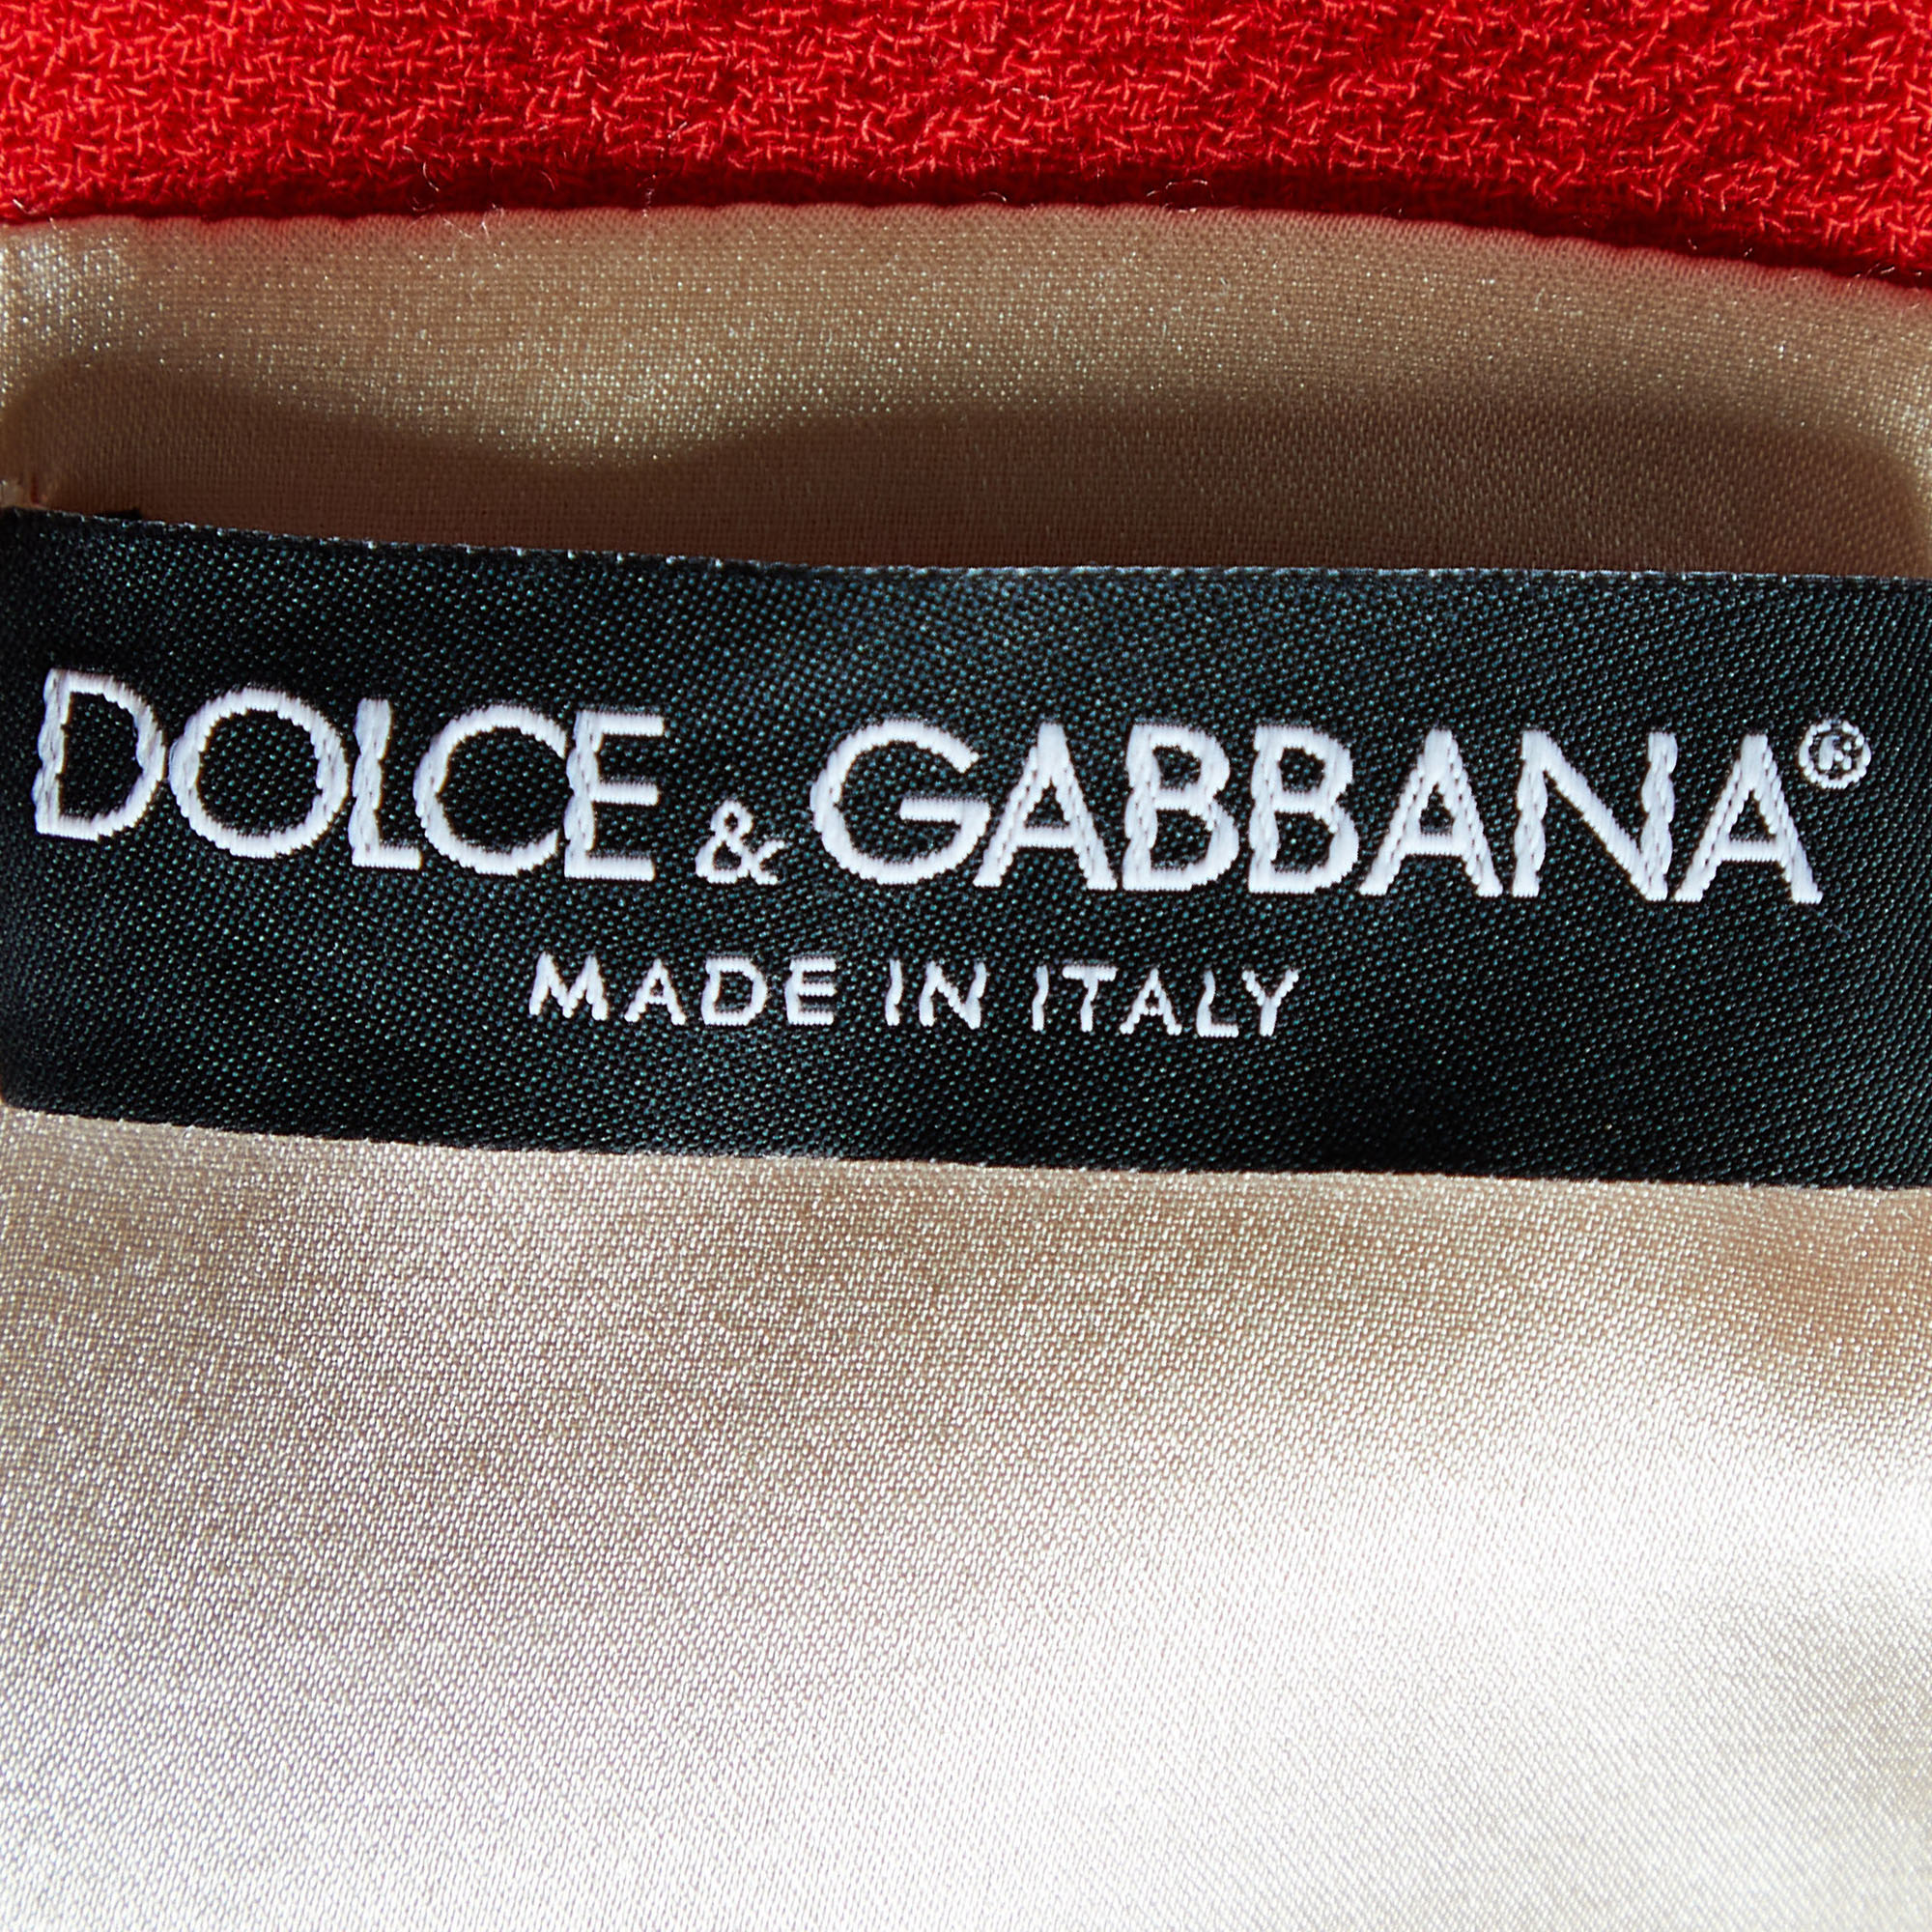 Dolce & Gabbana Red Wool Flower Applique Button Front Coat L